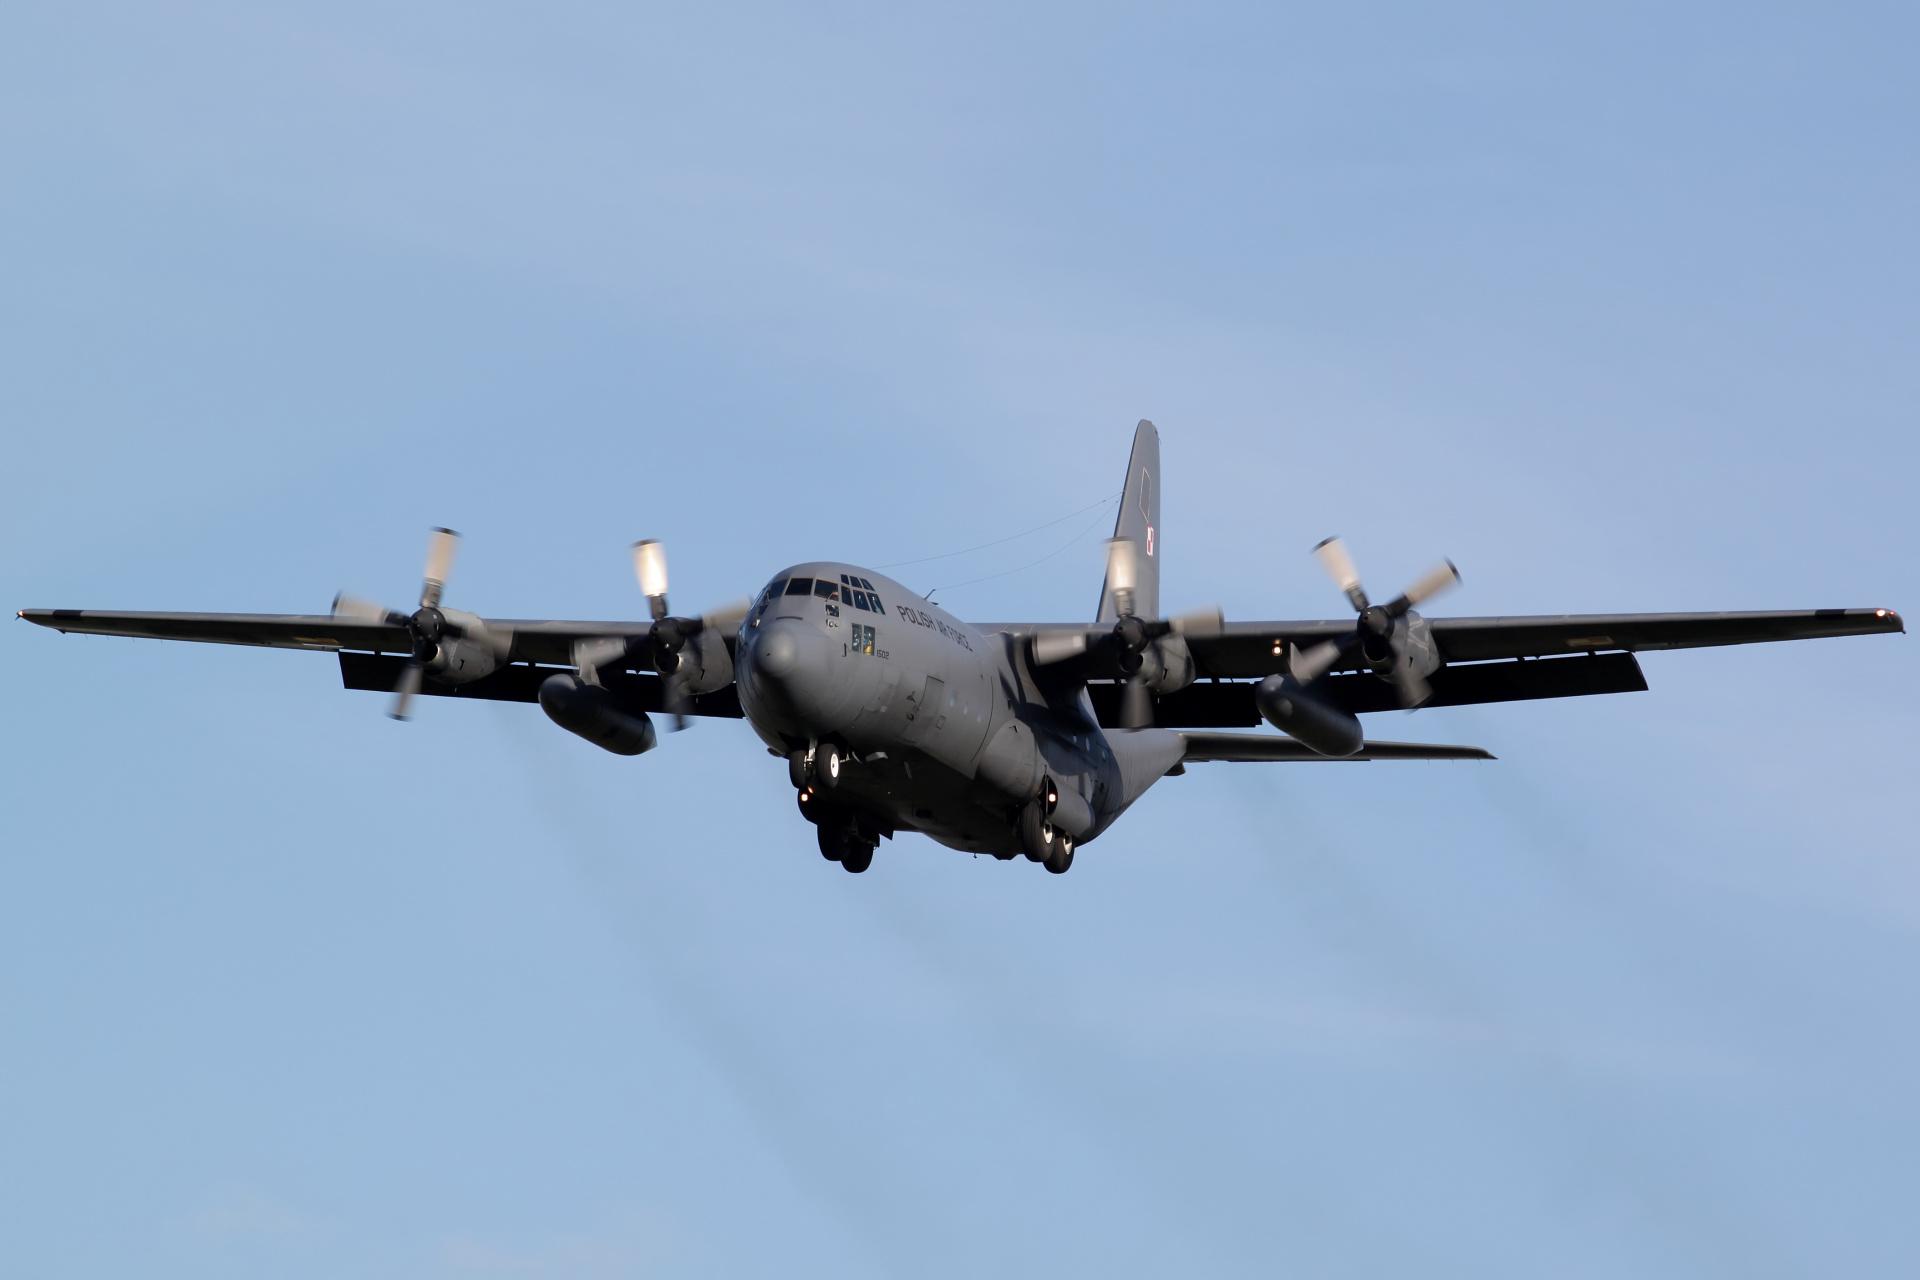 C-130E, 1502 (Aircraft » EPWA Spotting » Lockheed C-130 Hercules » Polish Air Force)